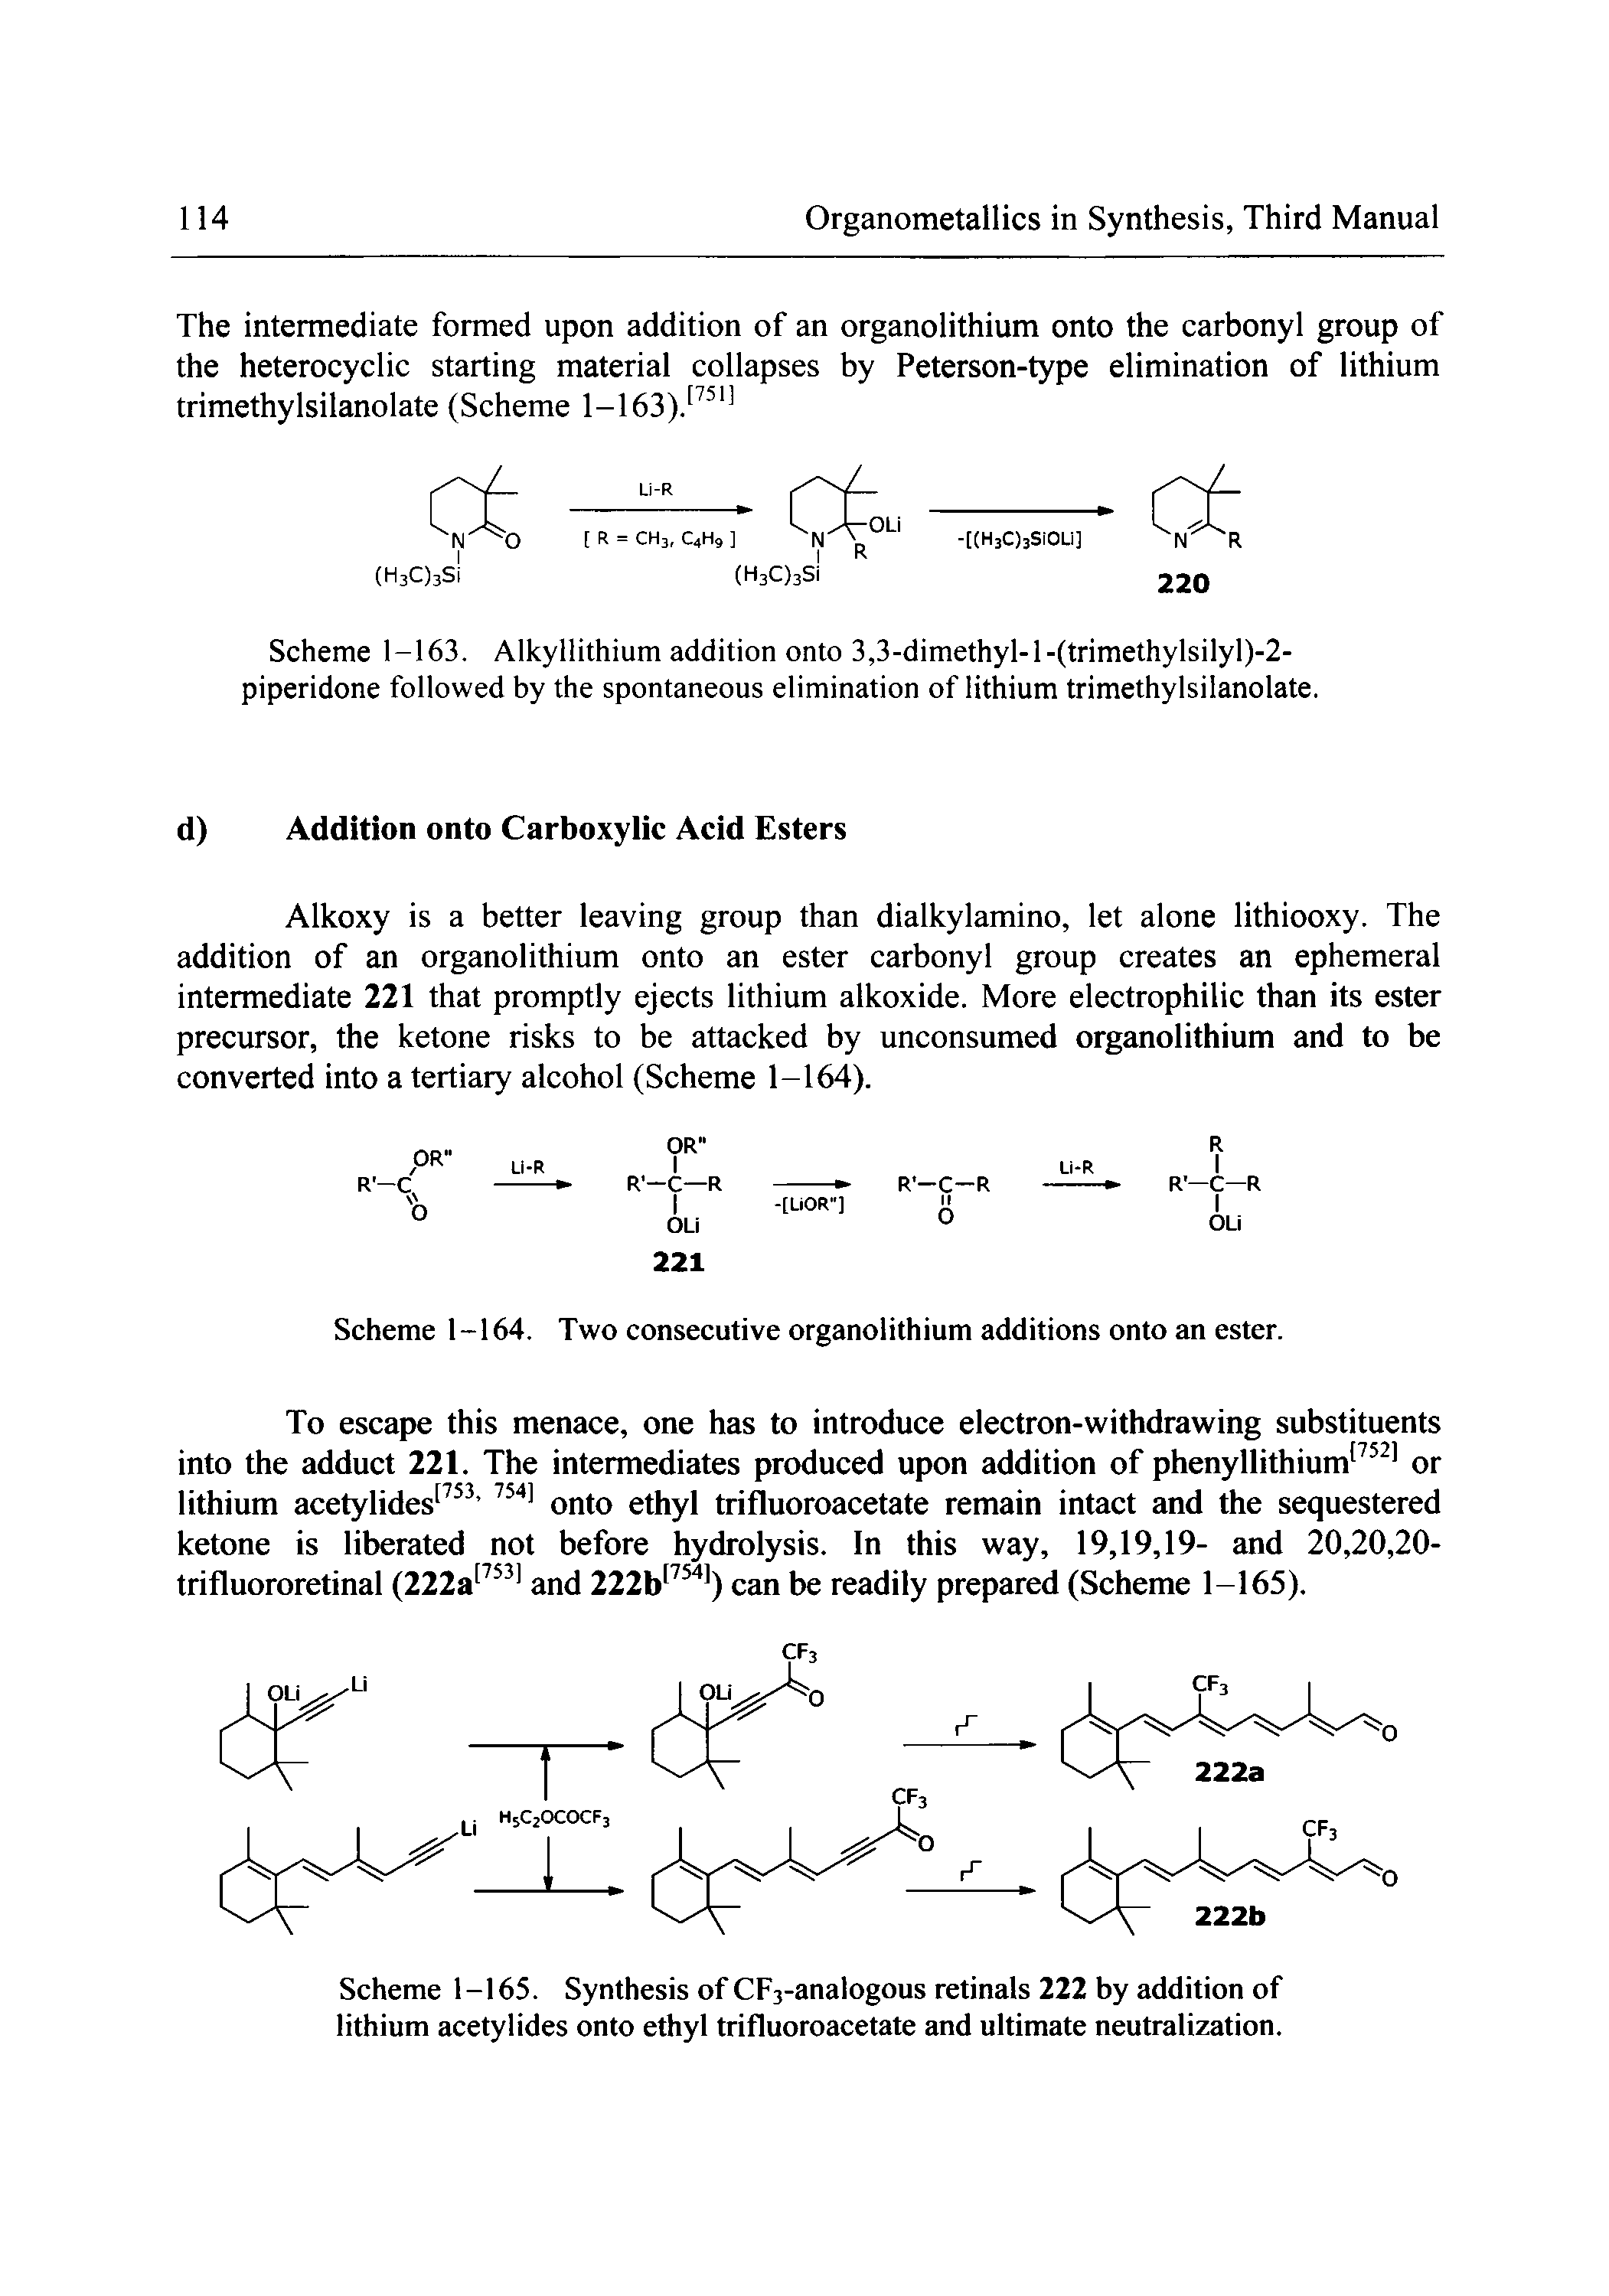 Scheme 1-163. Alkyllithium addition onto 3,3-dimethyl-l-(trimethylsilyl)-2-piperidone followed by the spontaneous elimination of lithium trimethylsilanolate.